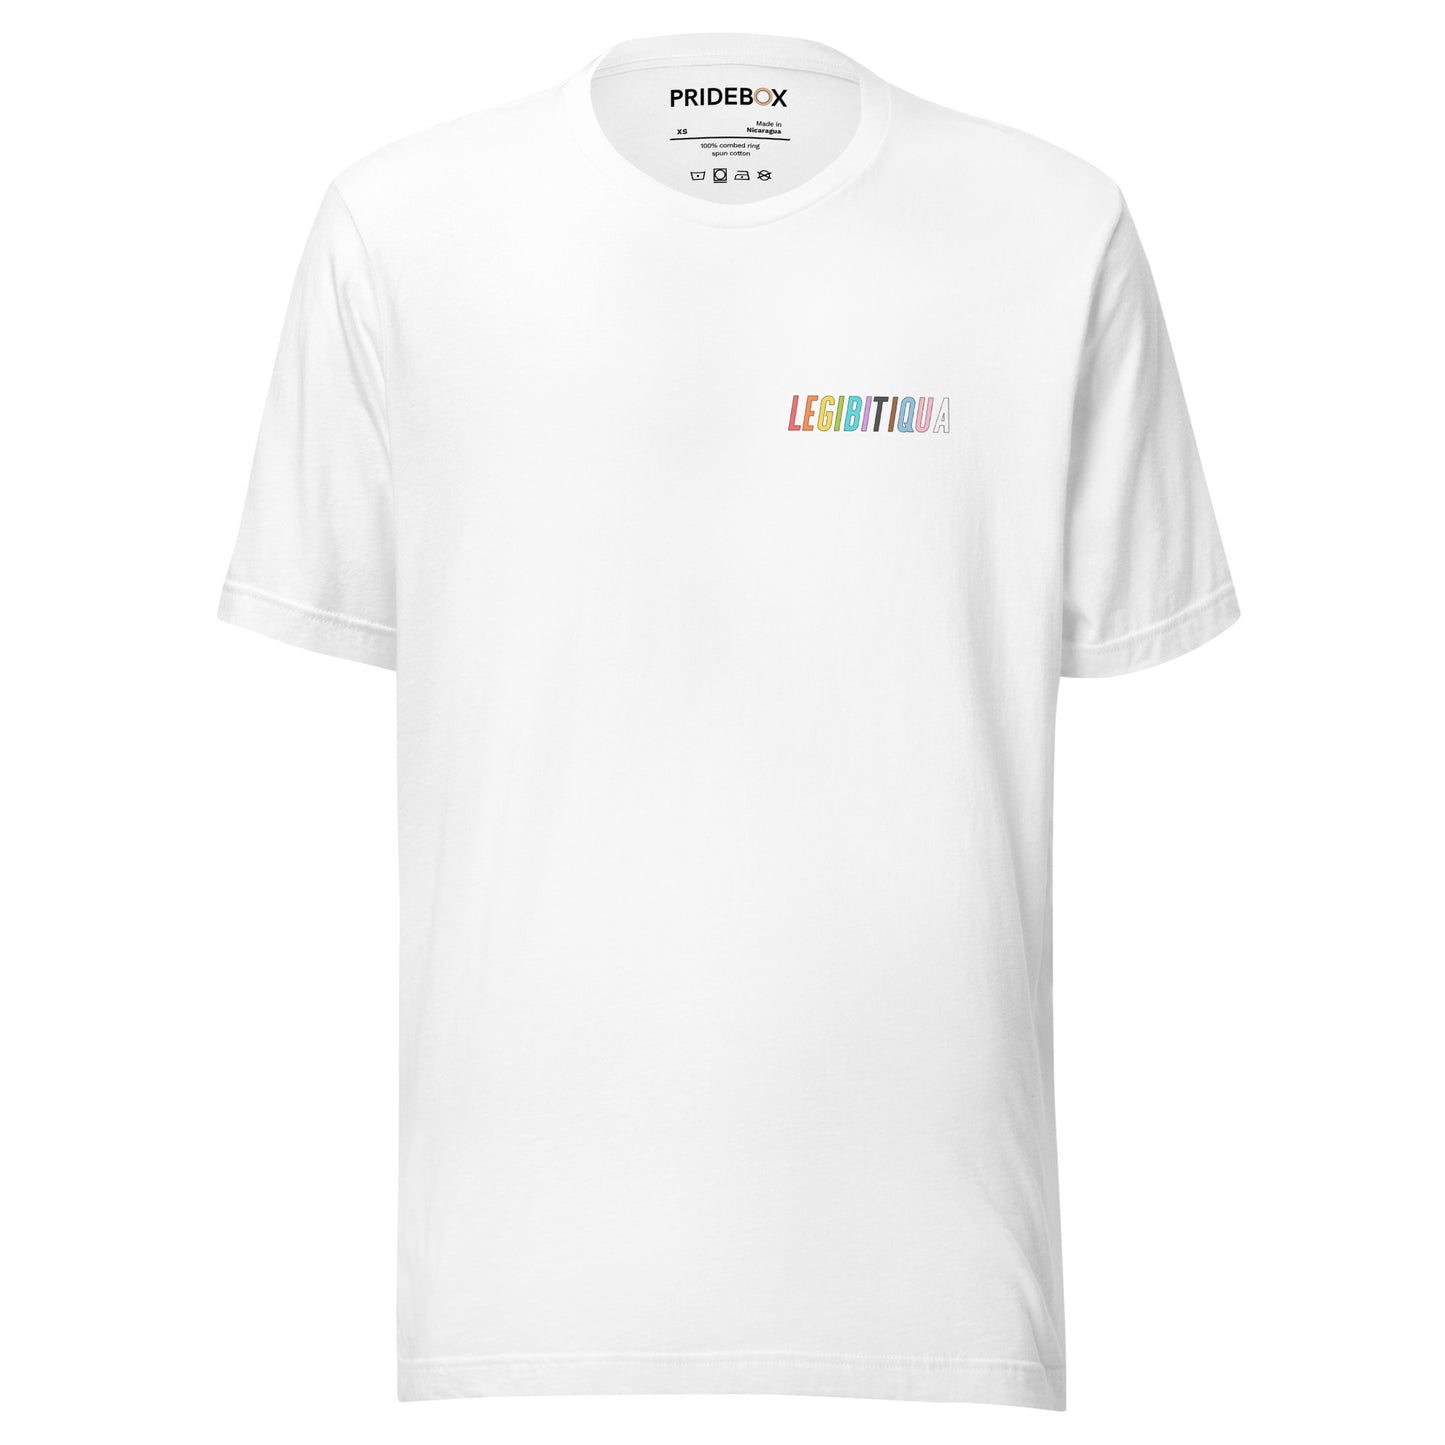 LGBT+ Legibitiqua Unisex T-shirt